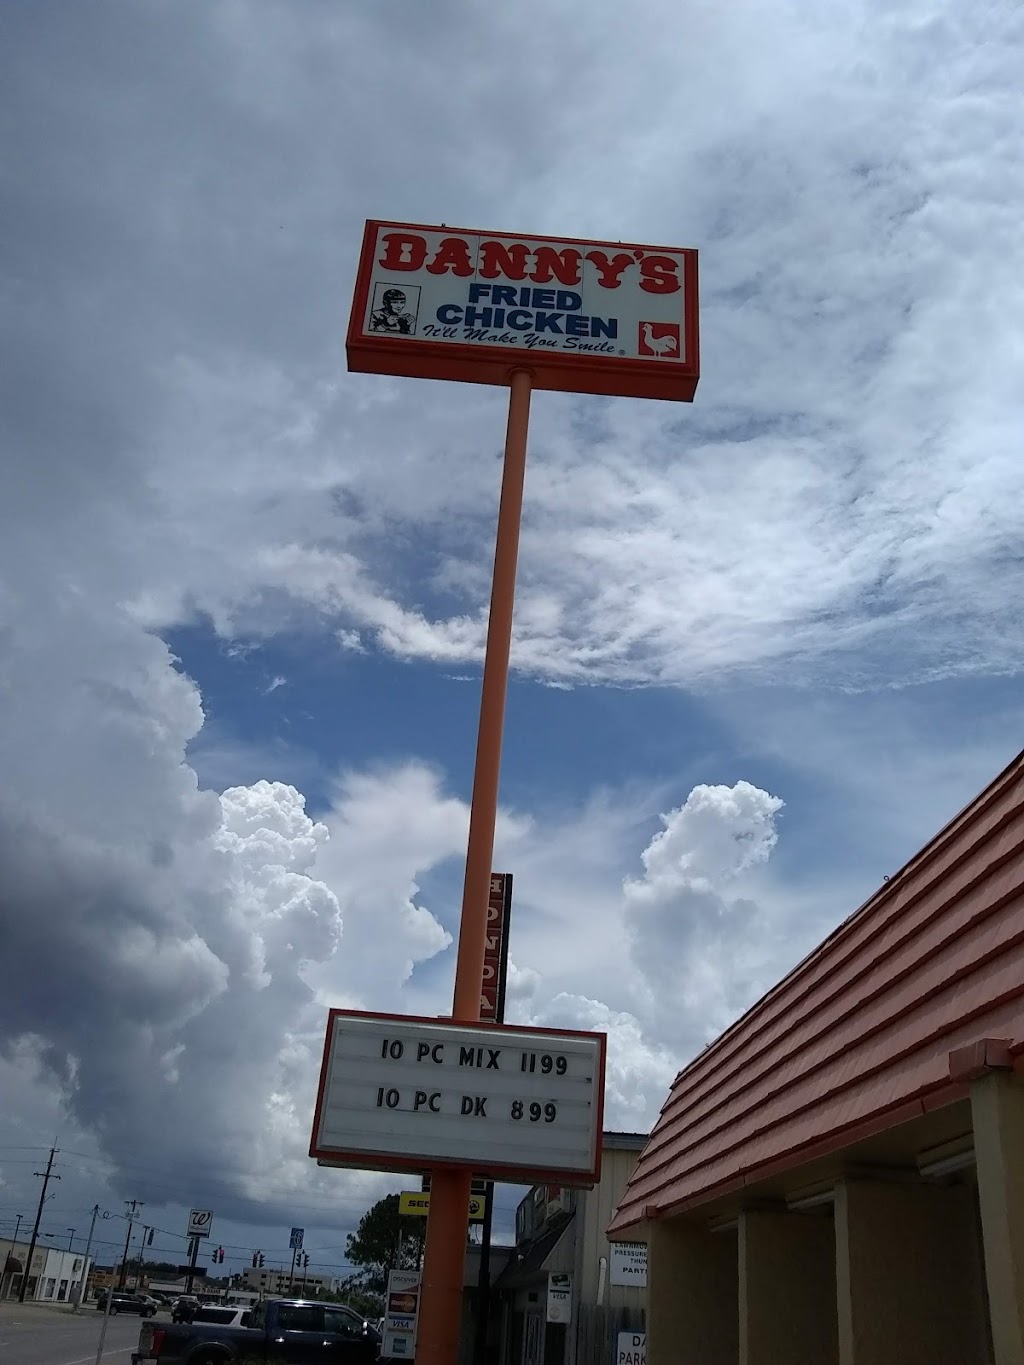 Dannys Fried Chicken | restaurant | 700 Brashear Ave, Morgan City, LA 70380, USA | 9853846160 OR +1 985-384-6160